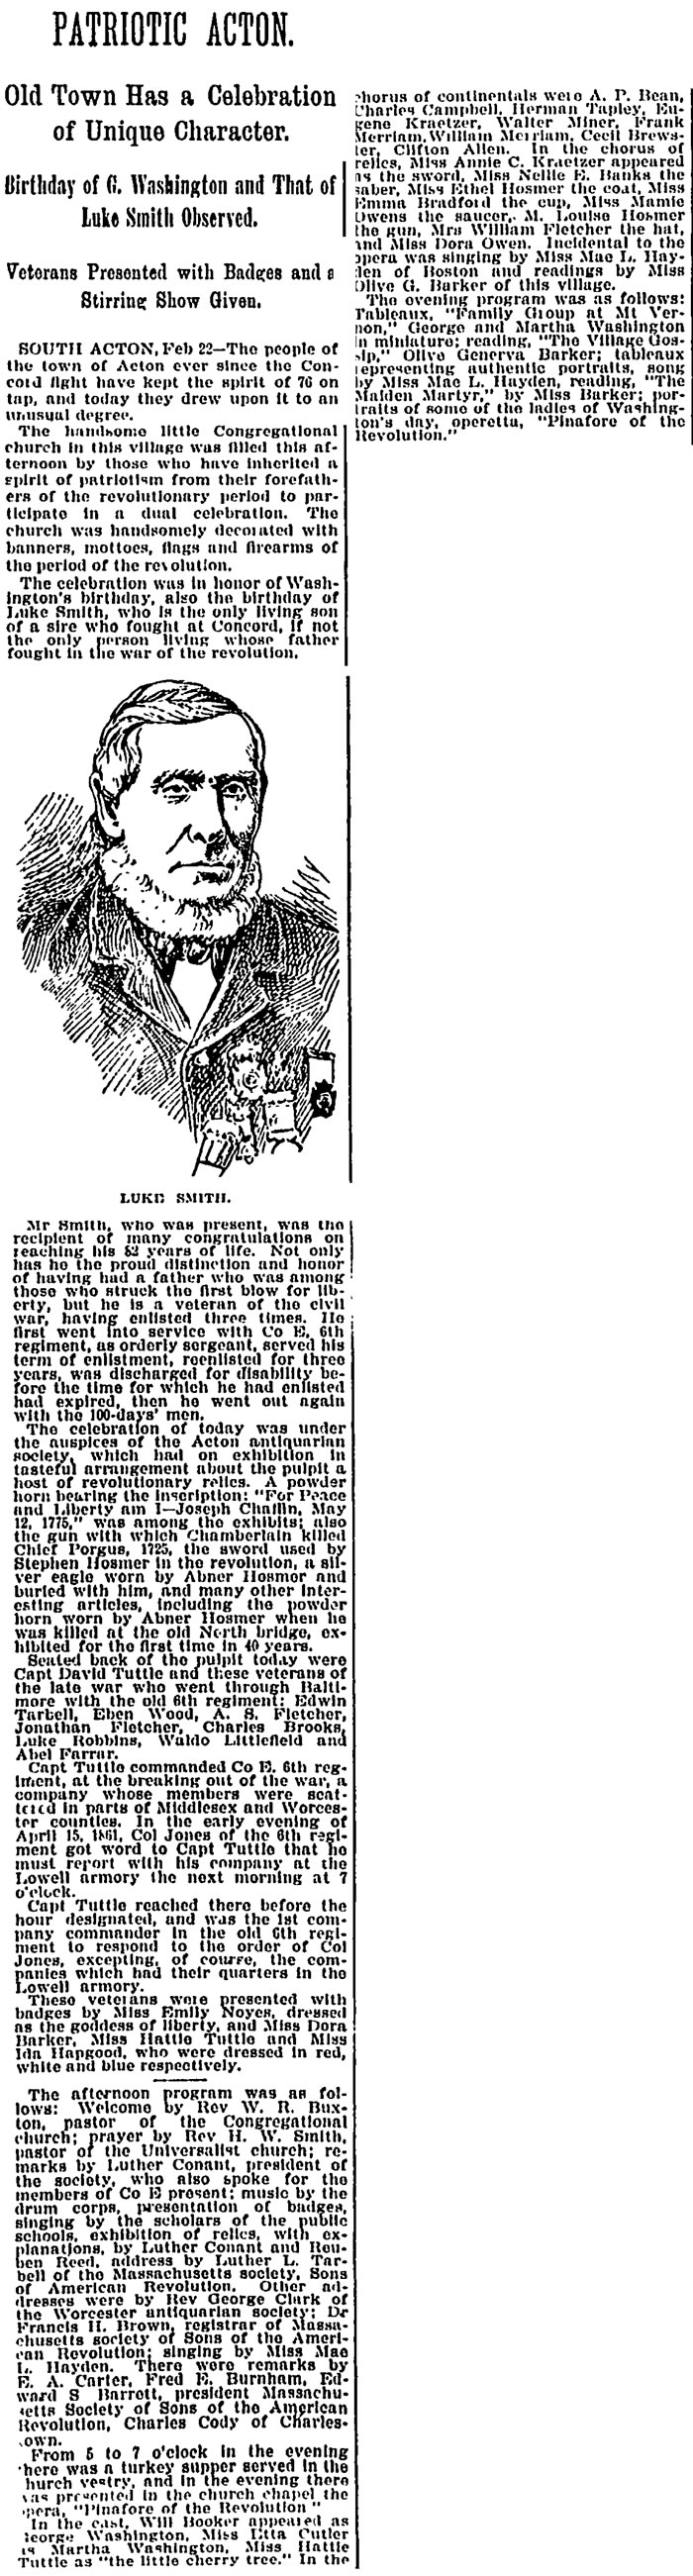 Boston Globe, Feb. 23, 1895